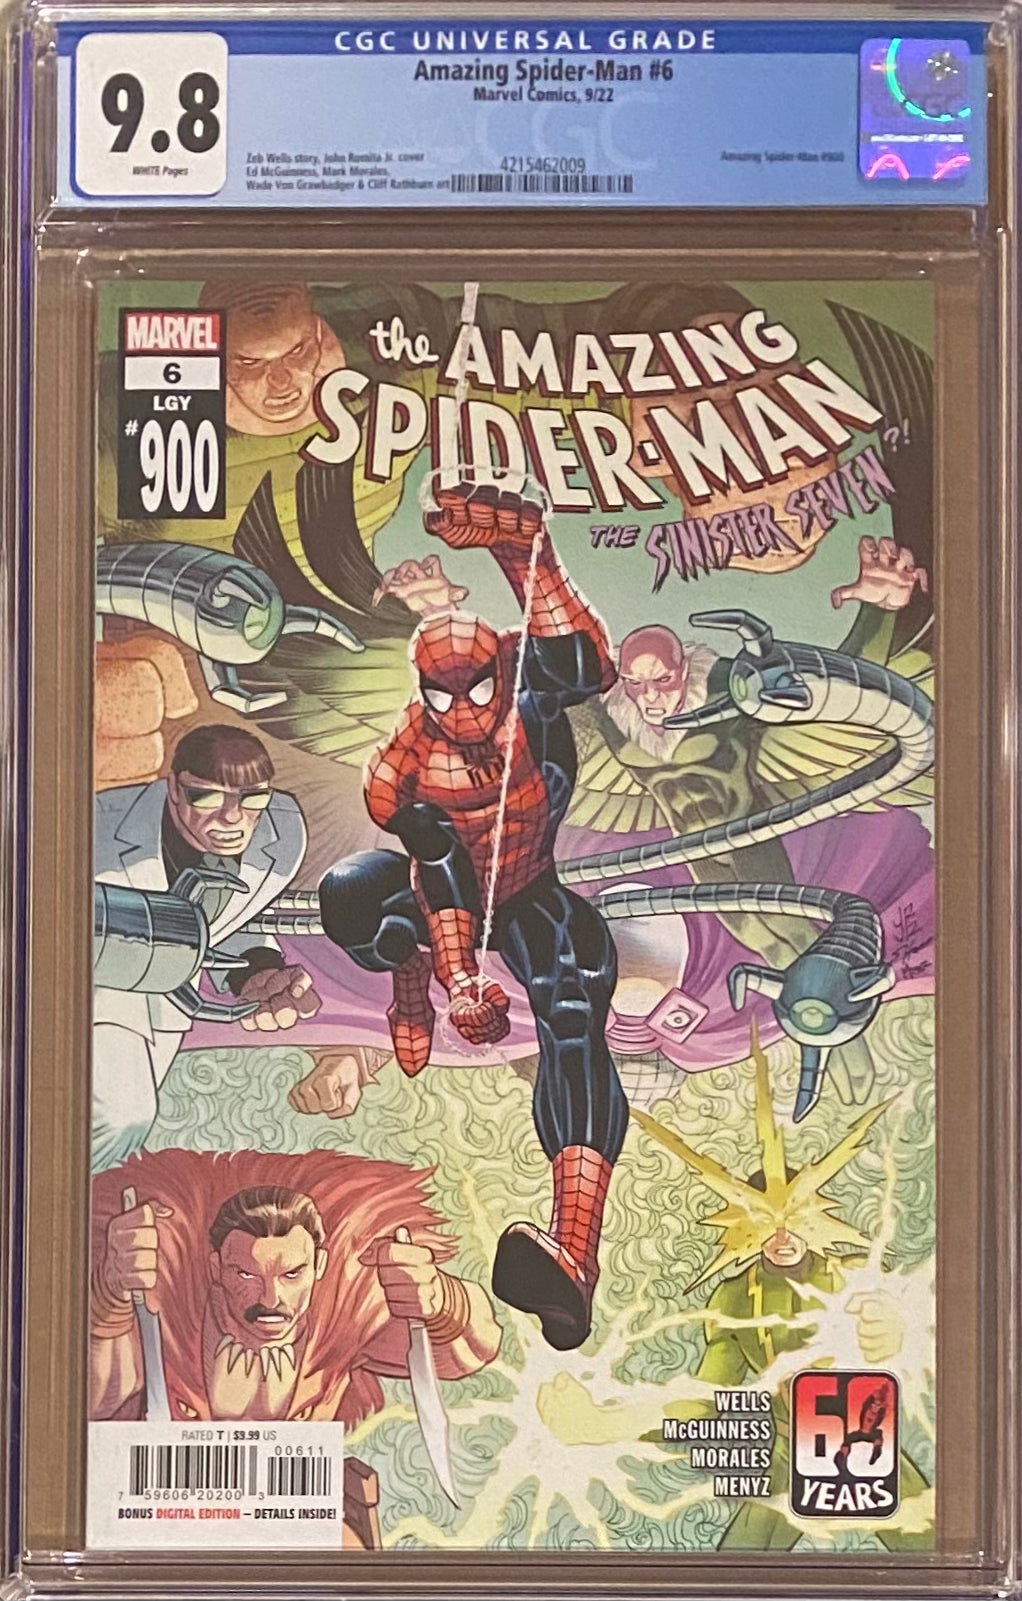 Amazing Spider-Man #6 (#900) CGC 9.8